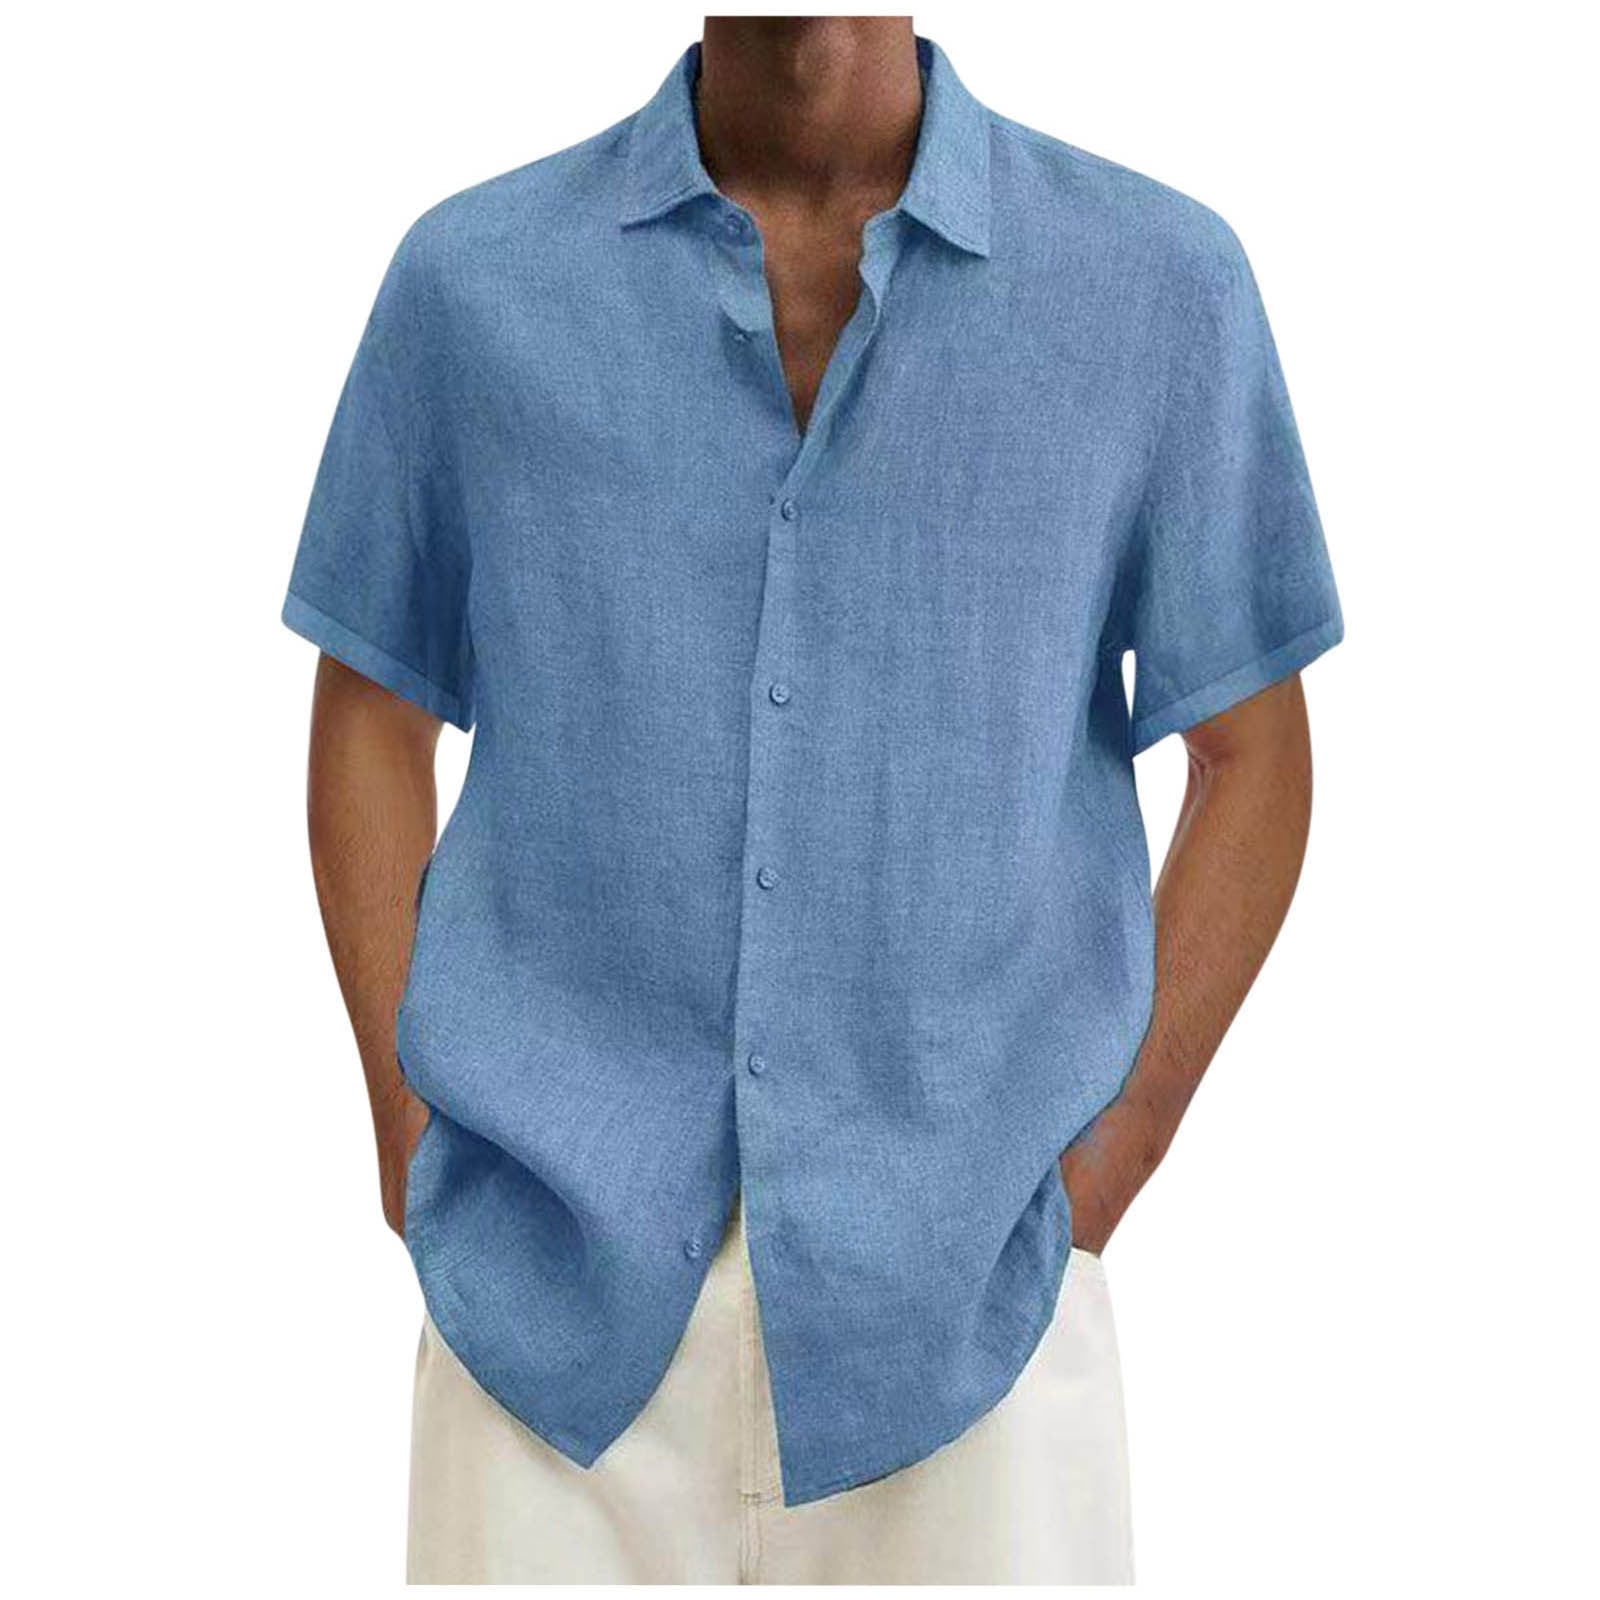 BADHUB Linen Shirts for Men, Men's Cotton Linen Casual Button Up T ...